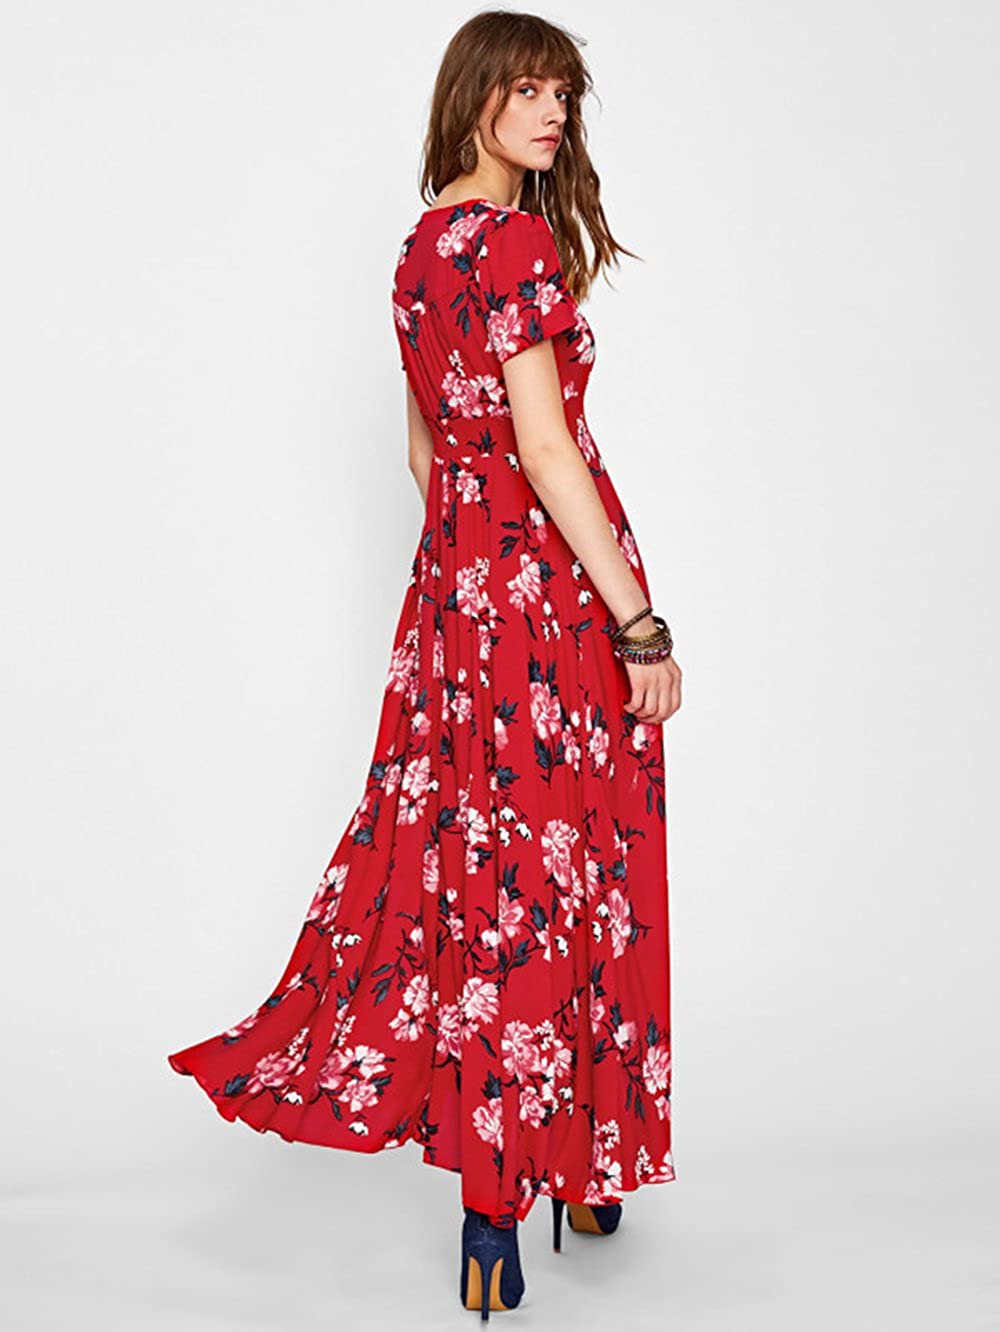 Milumia Women S Button Up Split Floral Print Flowy Party Maxi Dress Red